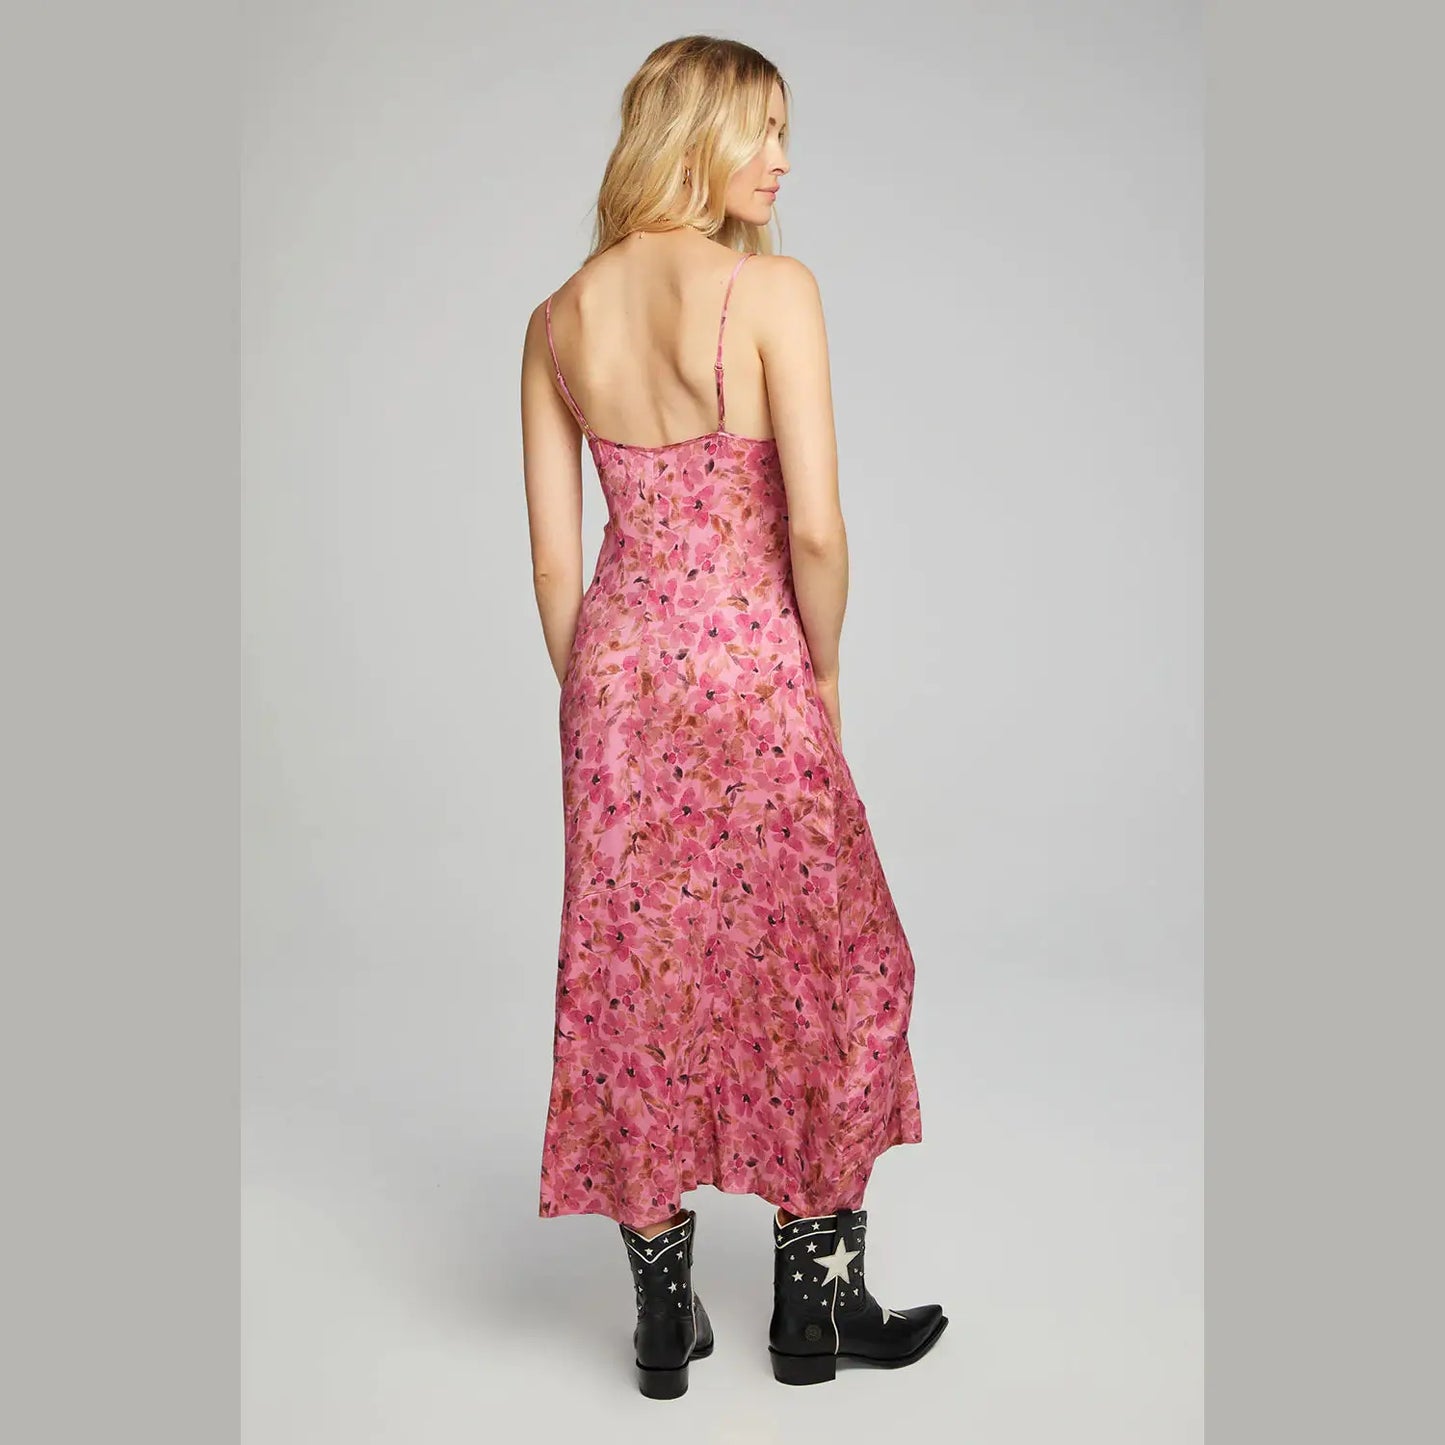 Saltwater Luxe SHARICE Hot Pink Midi Tank Dress - Jaunts Boutique 